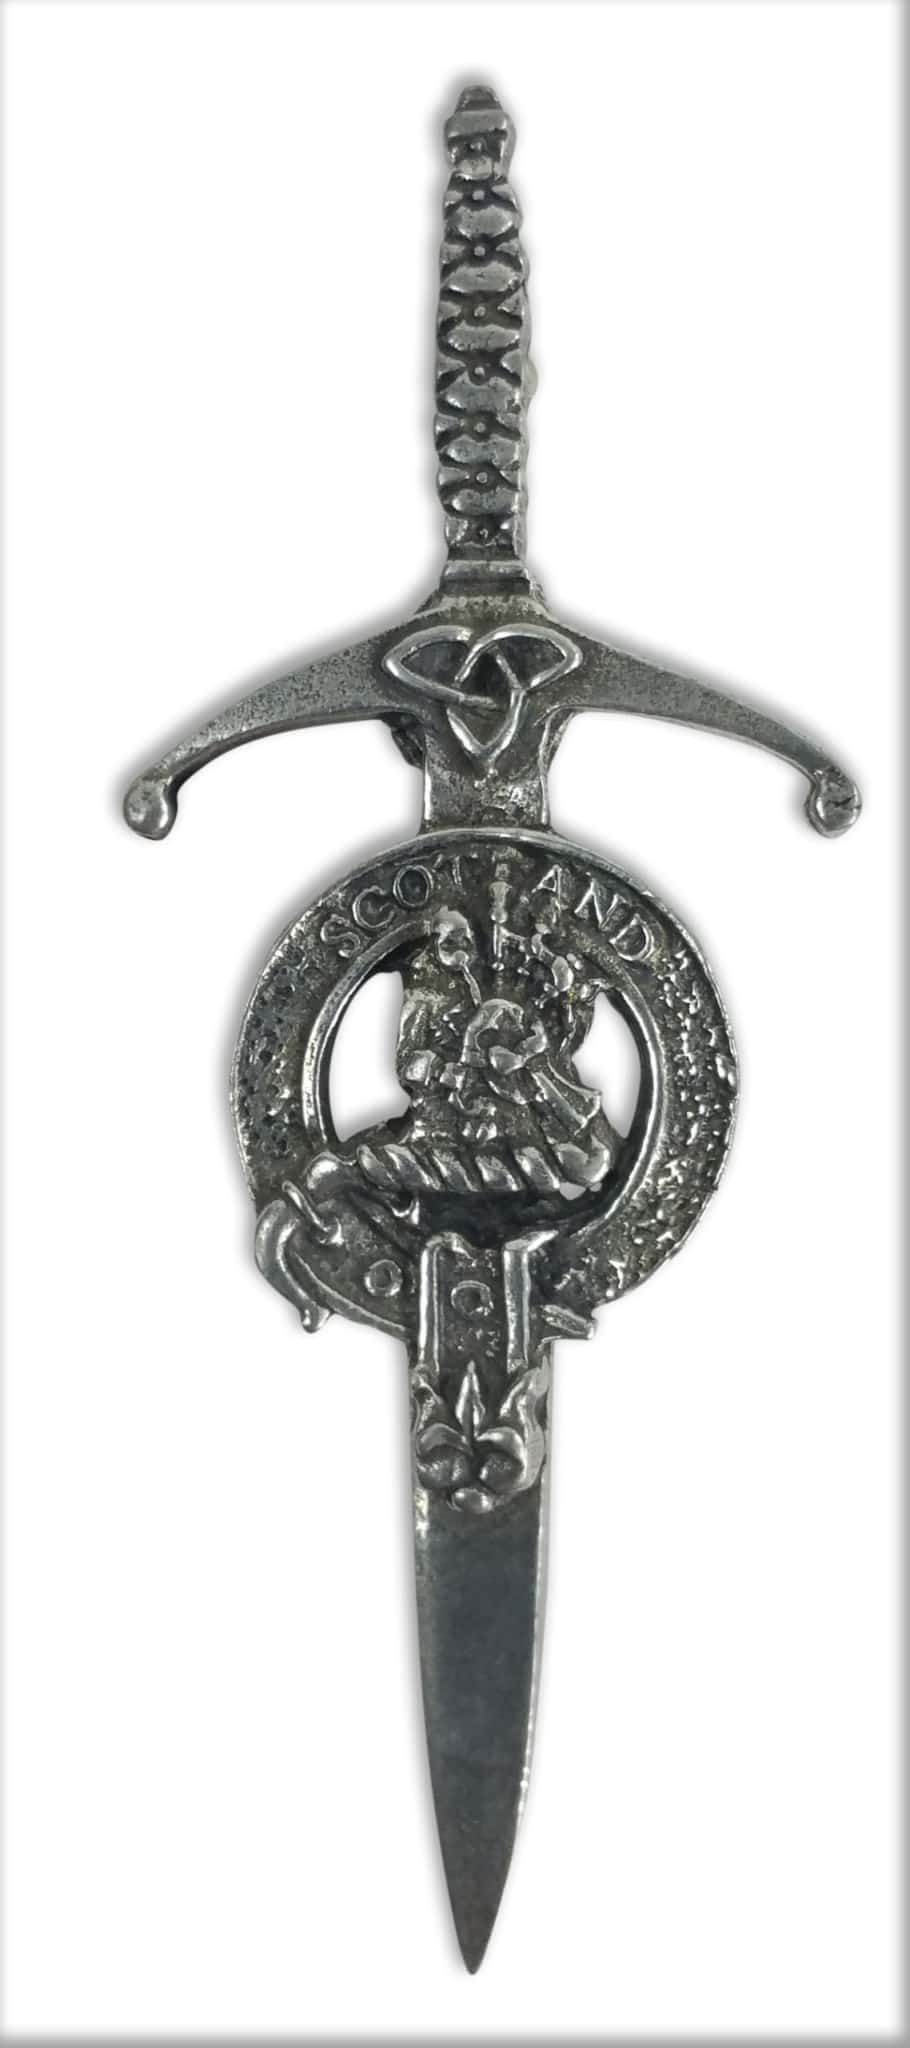 Rampant Lion Kilt Pin 3.5" Antique Finish Scottish Highland Kilt Pin with Badge 